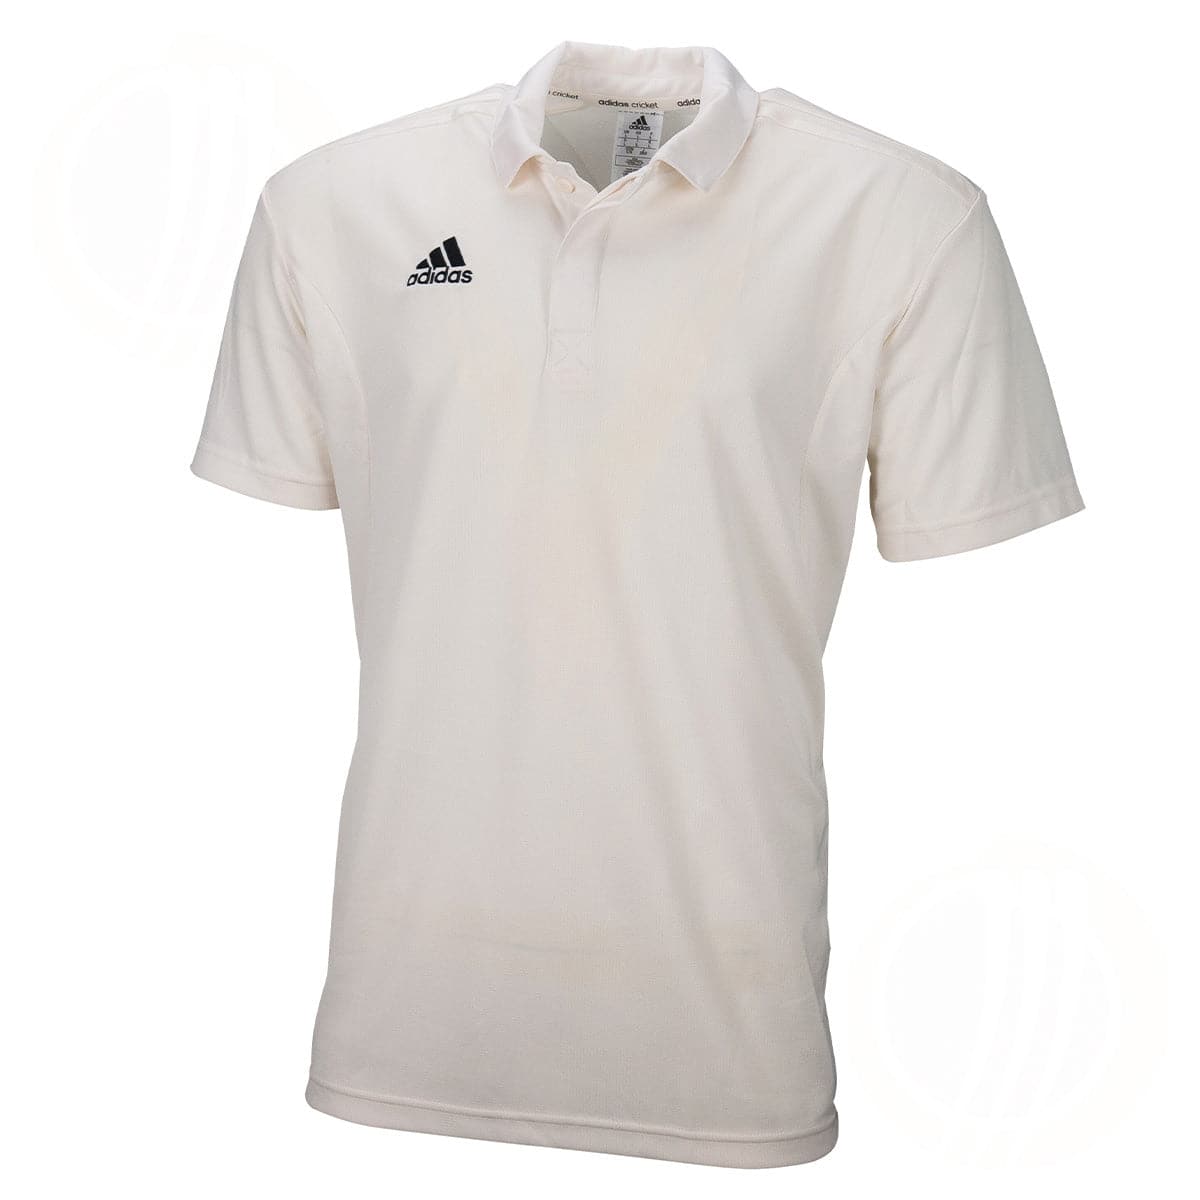 Adidas Cricket Clothing – Page 2